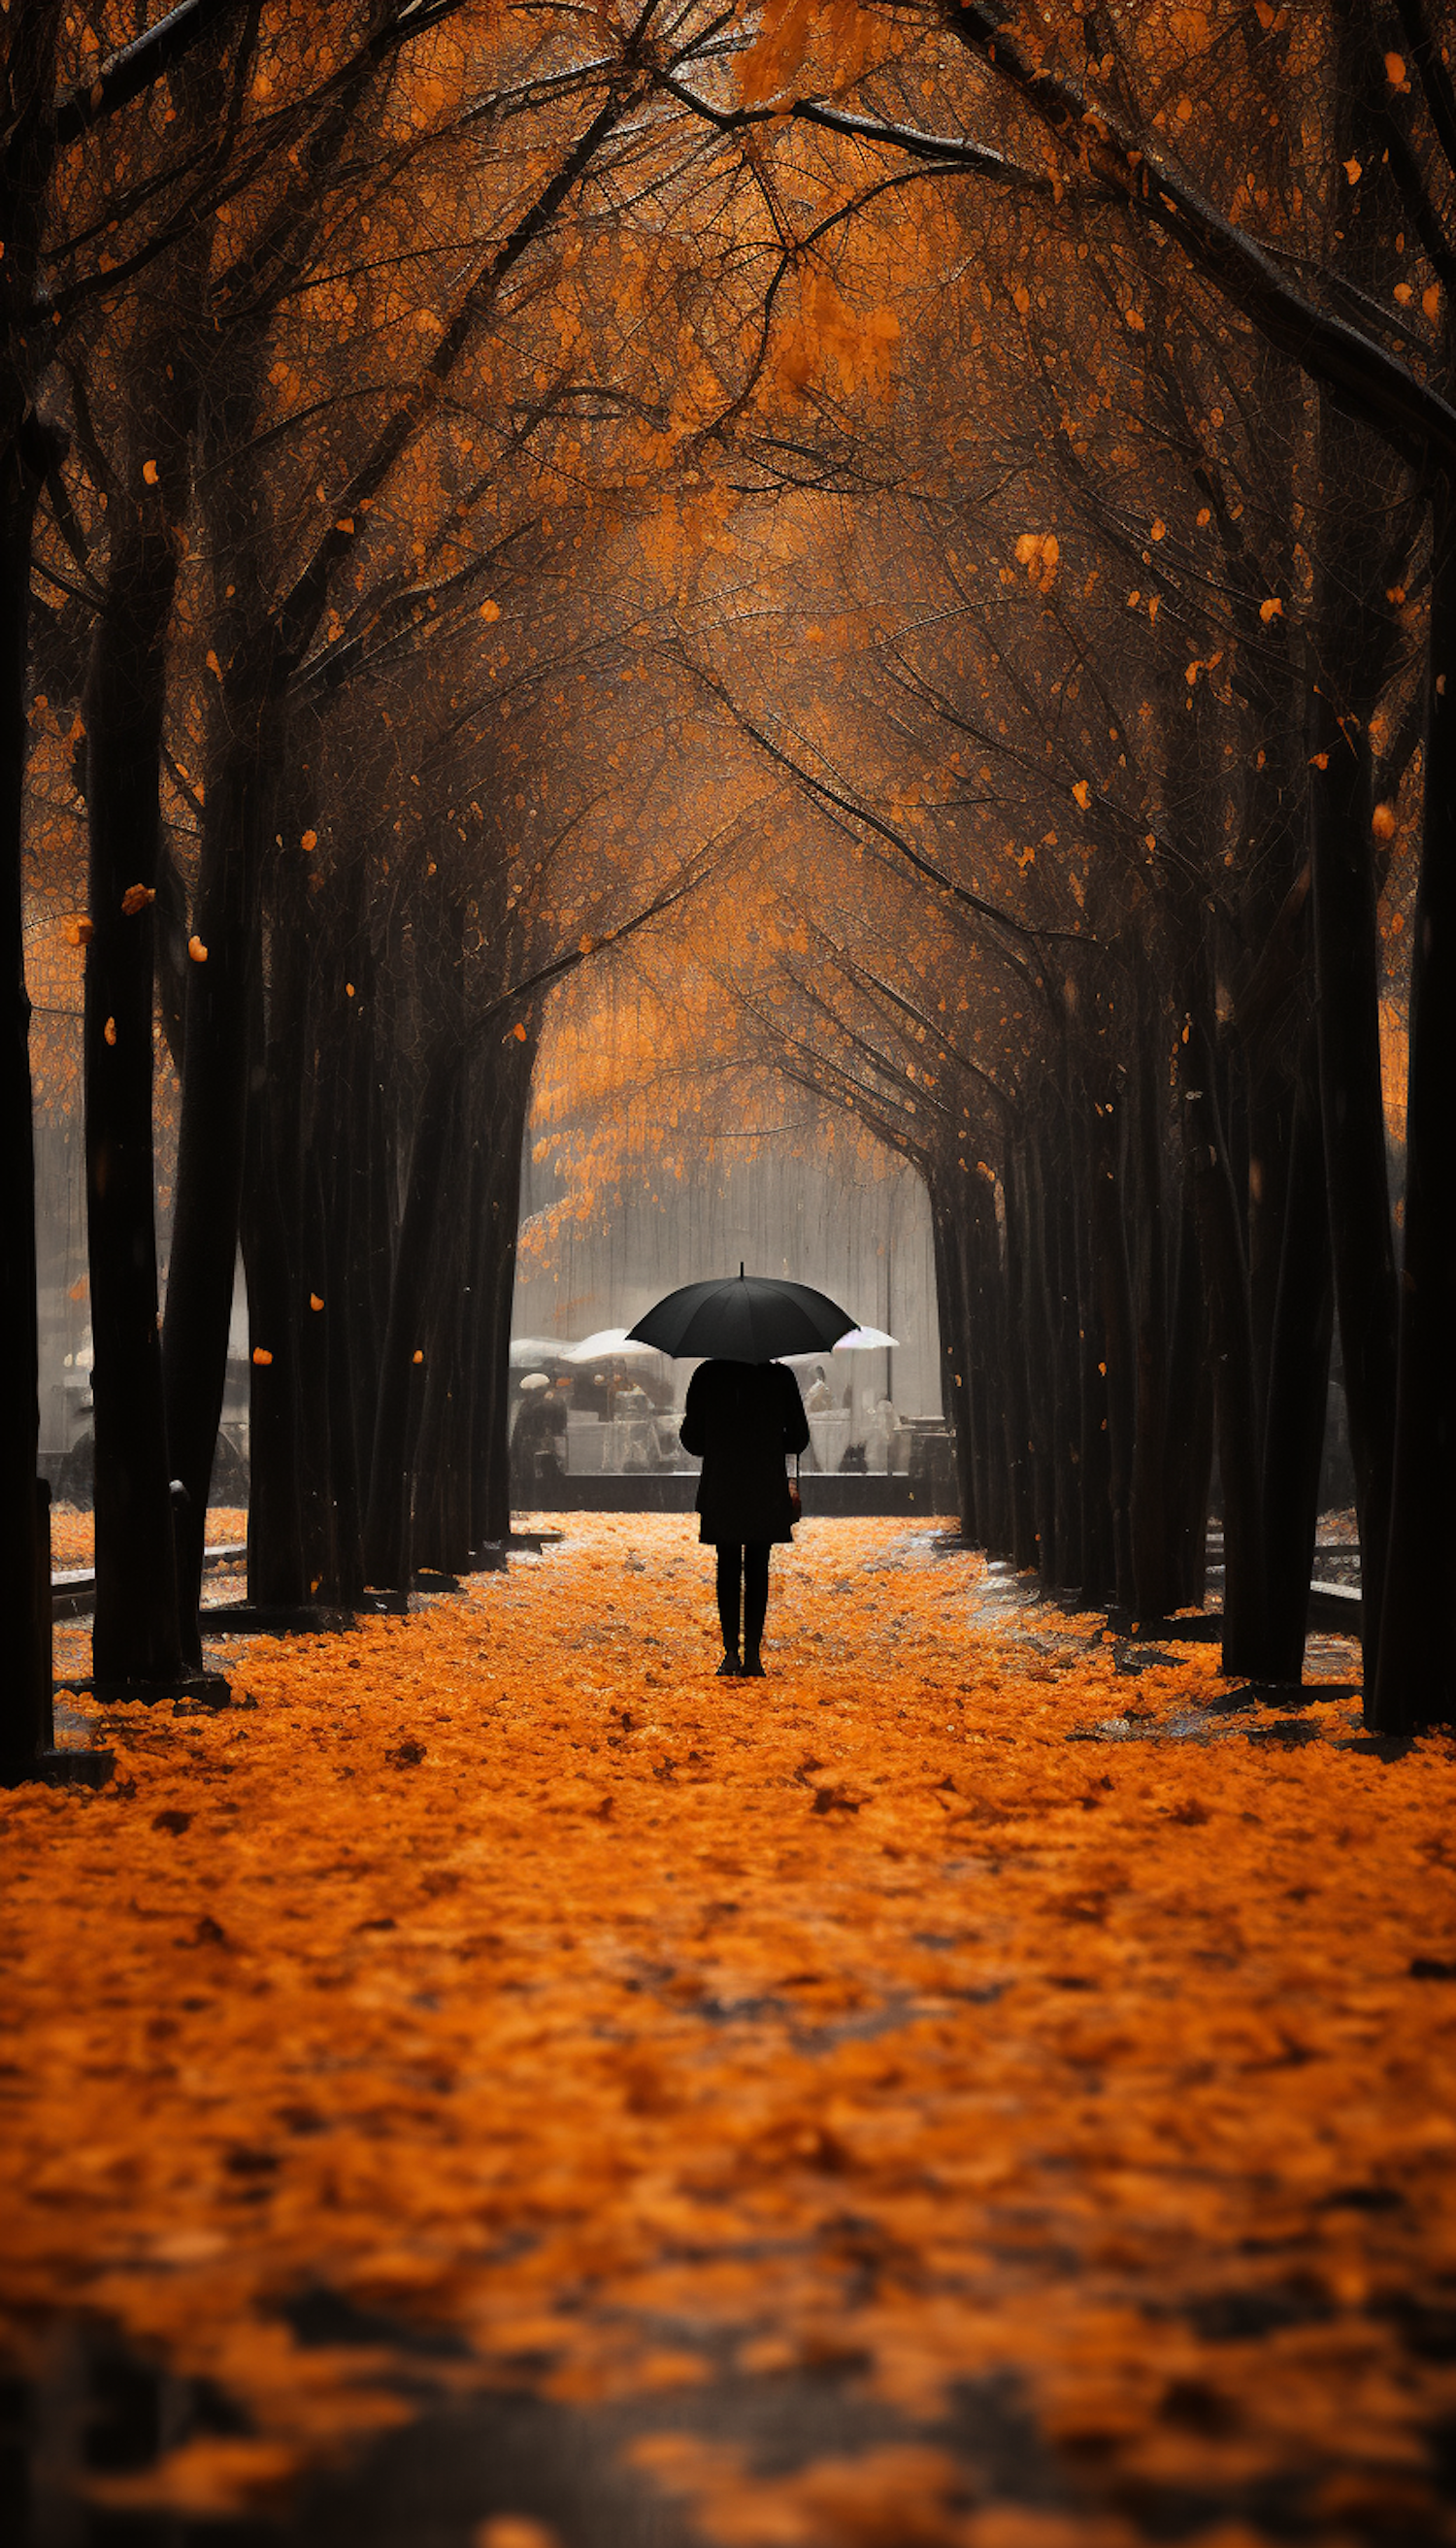 Autumn Solitude on a Misty Leaf-Strewn Path